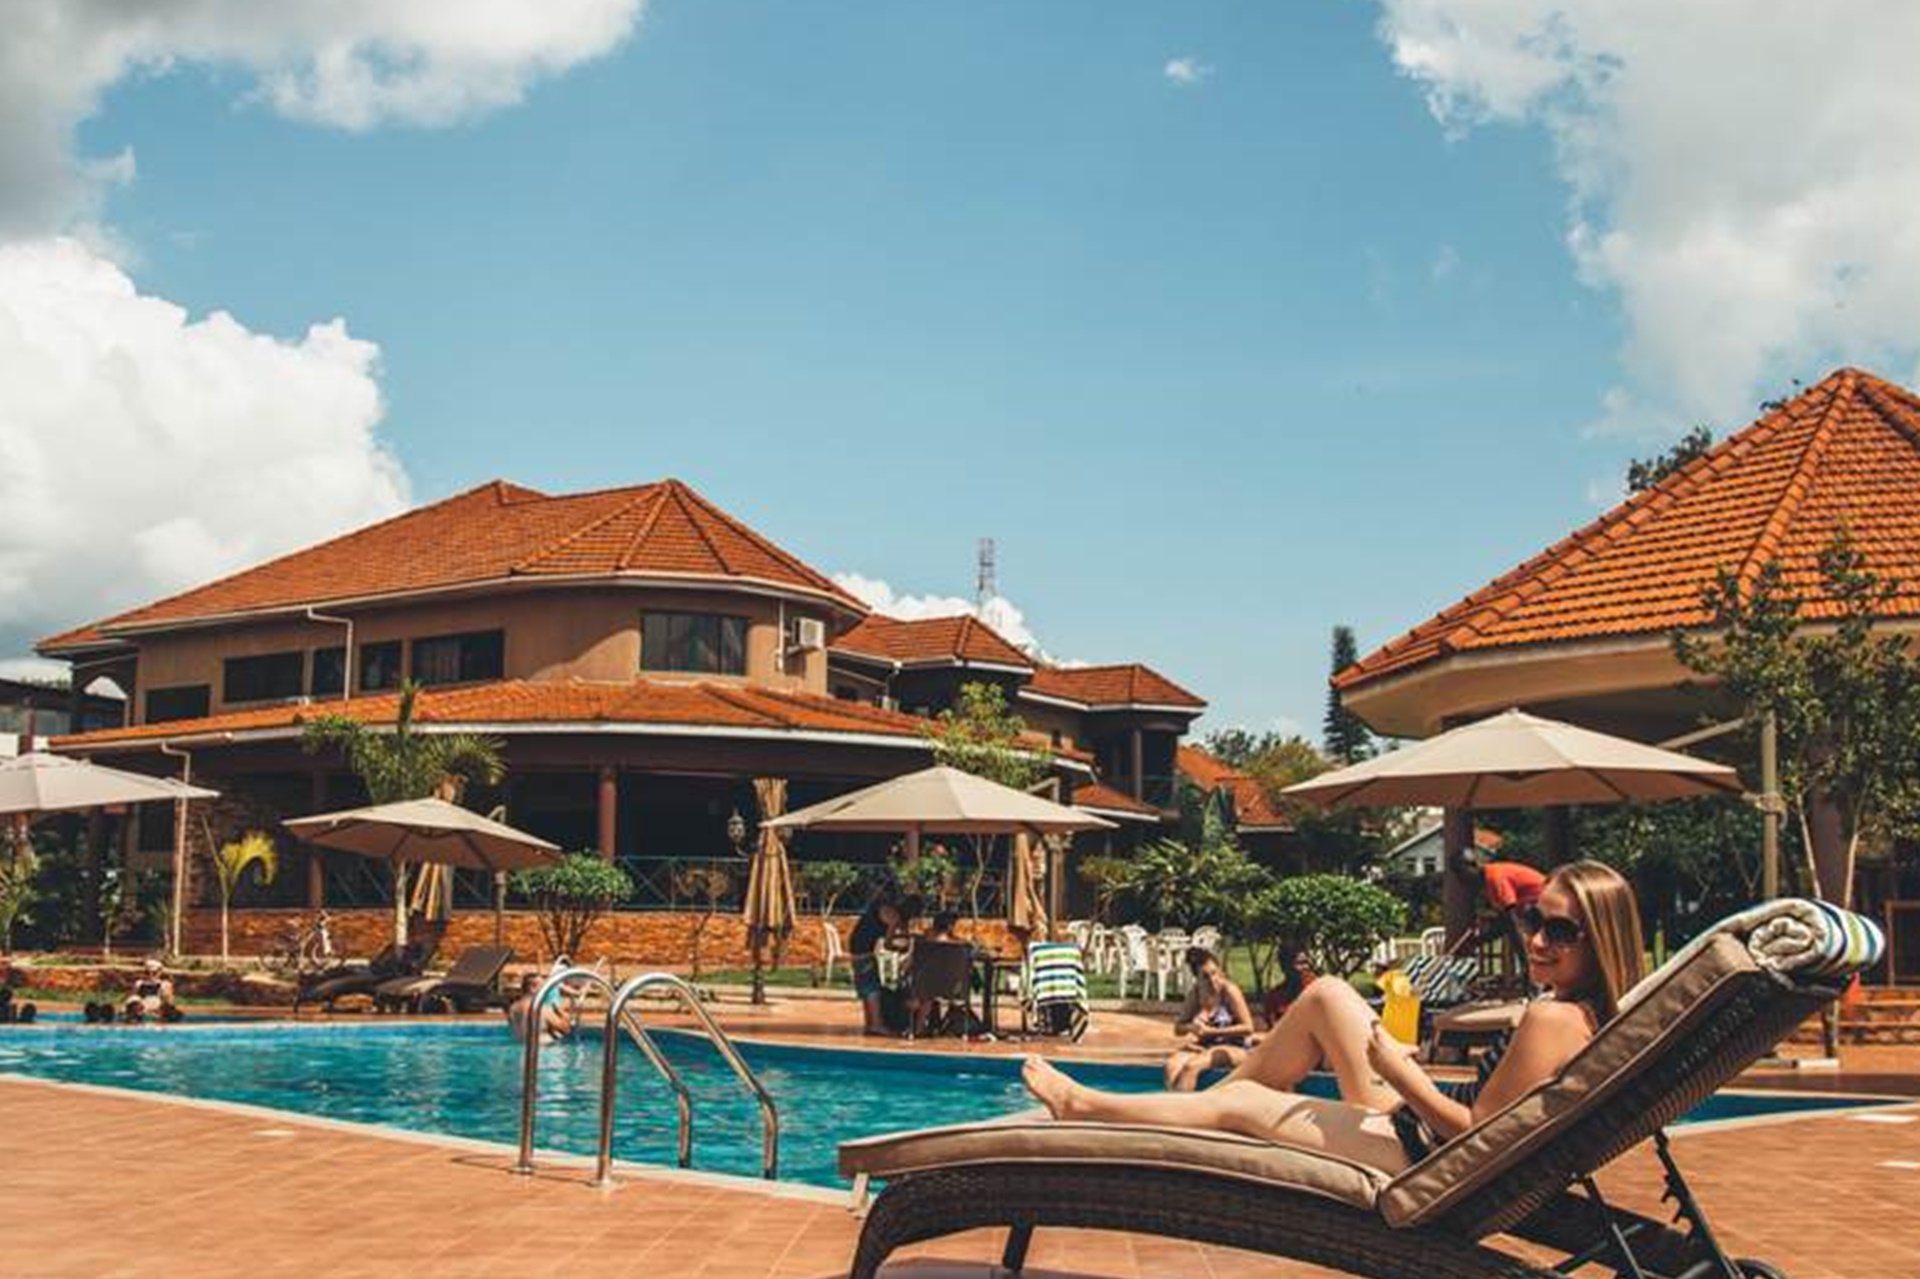 uganda Hotels - Jinja Hotels - accommodation in Jinja